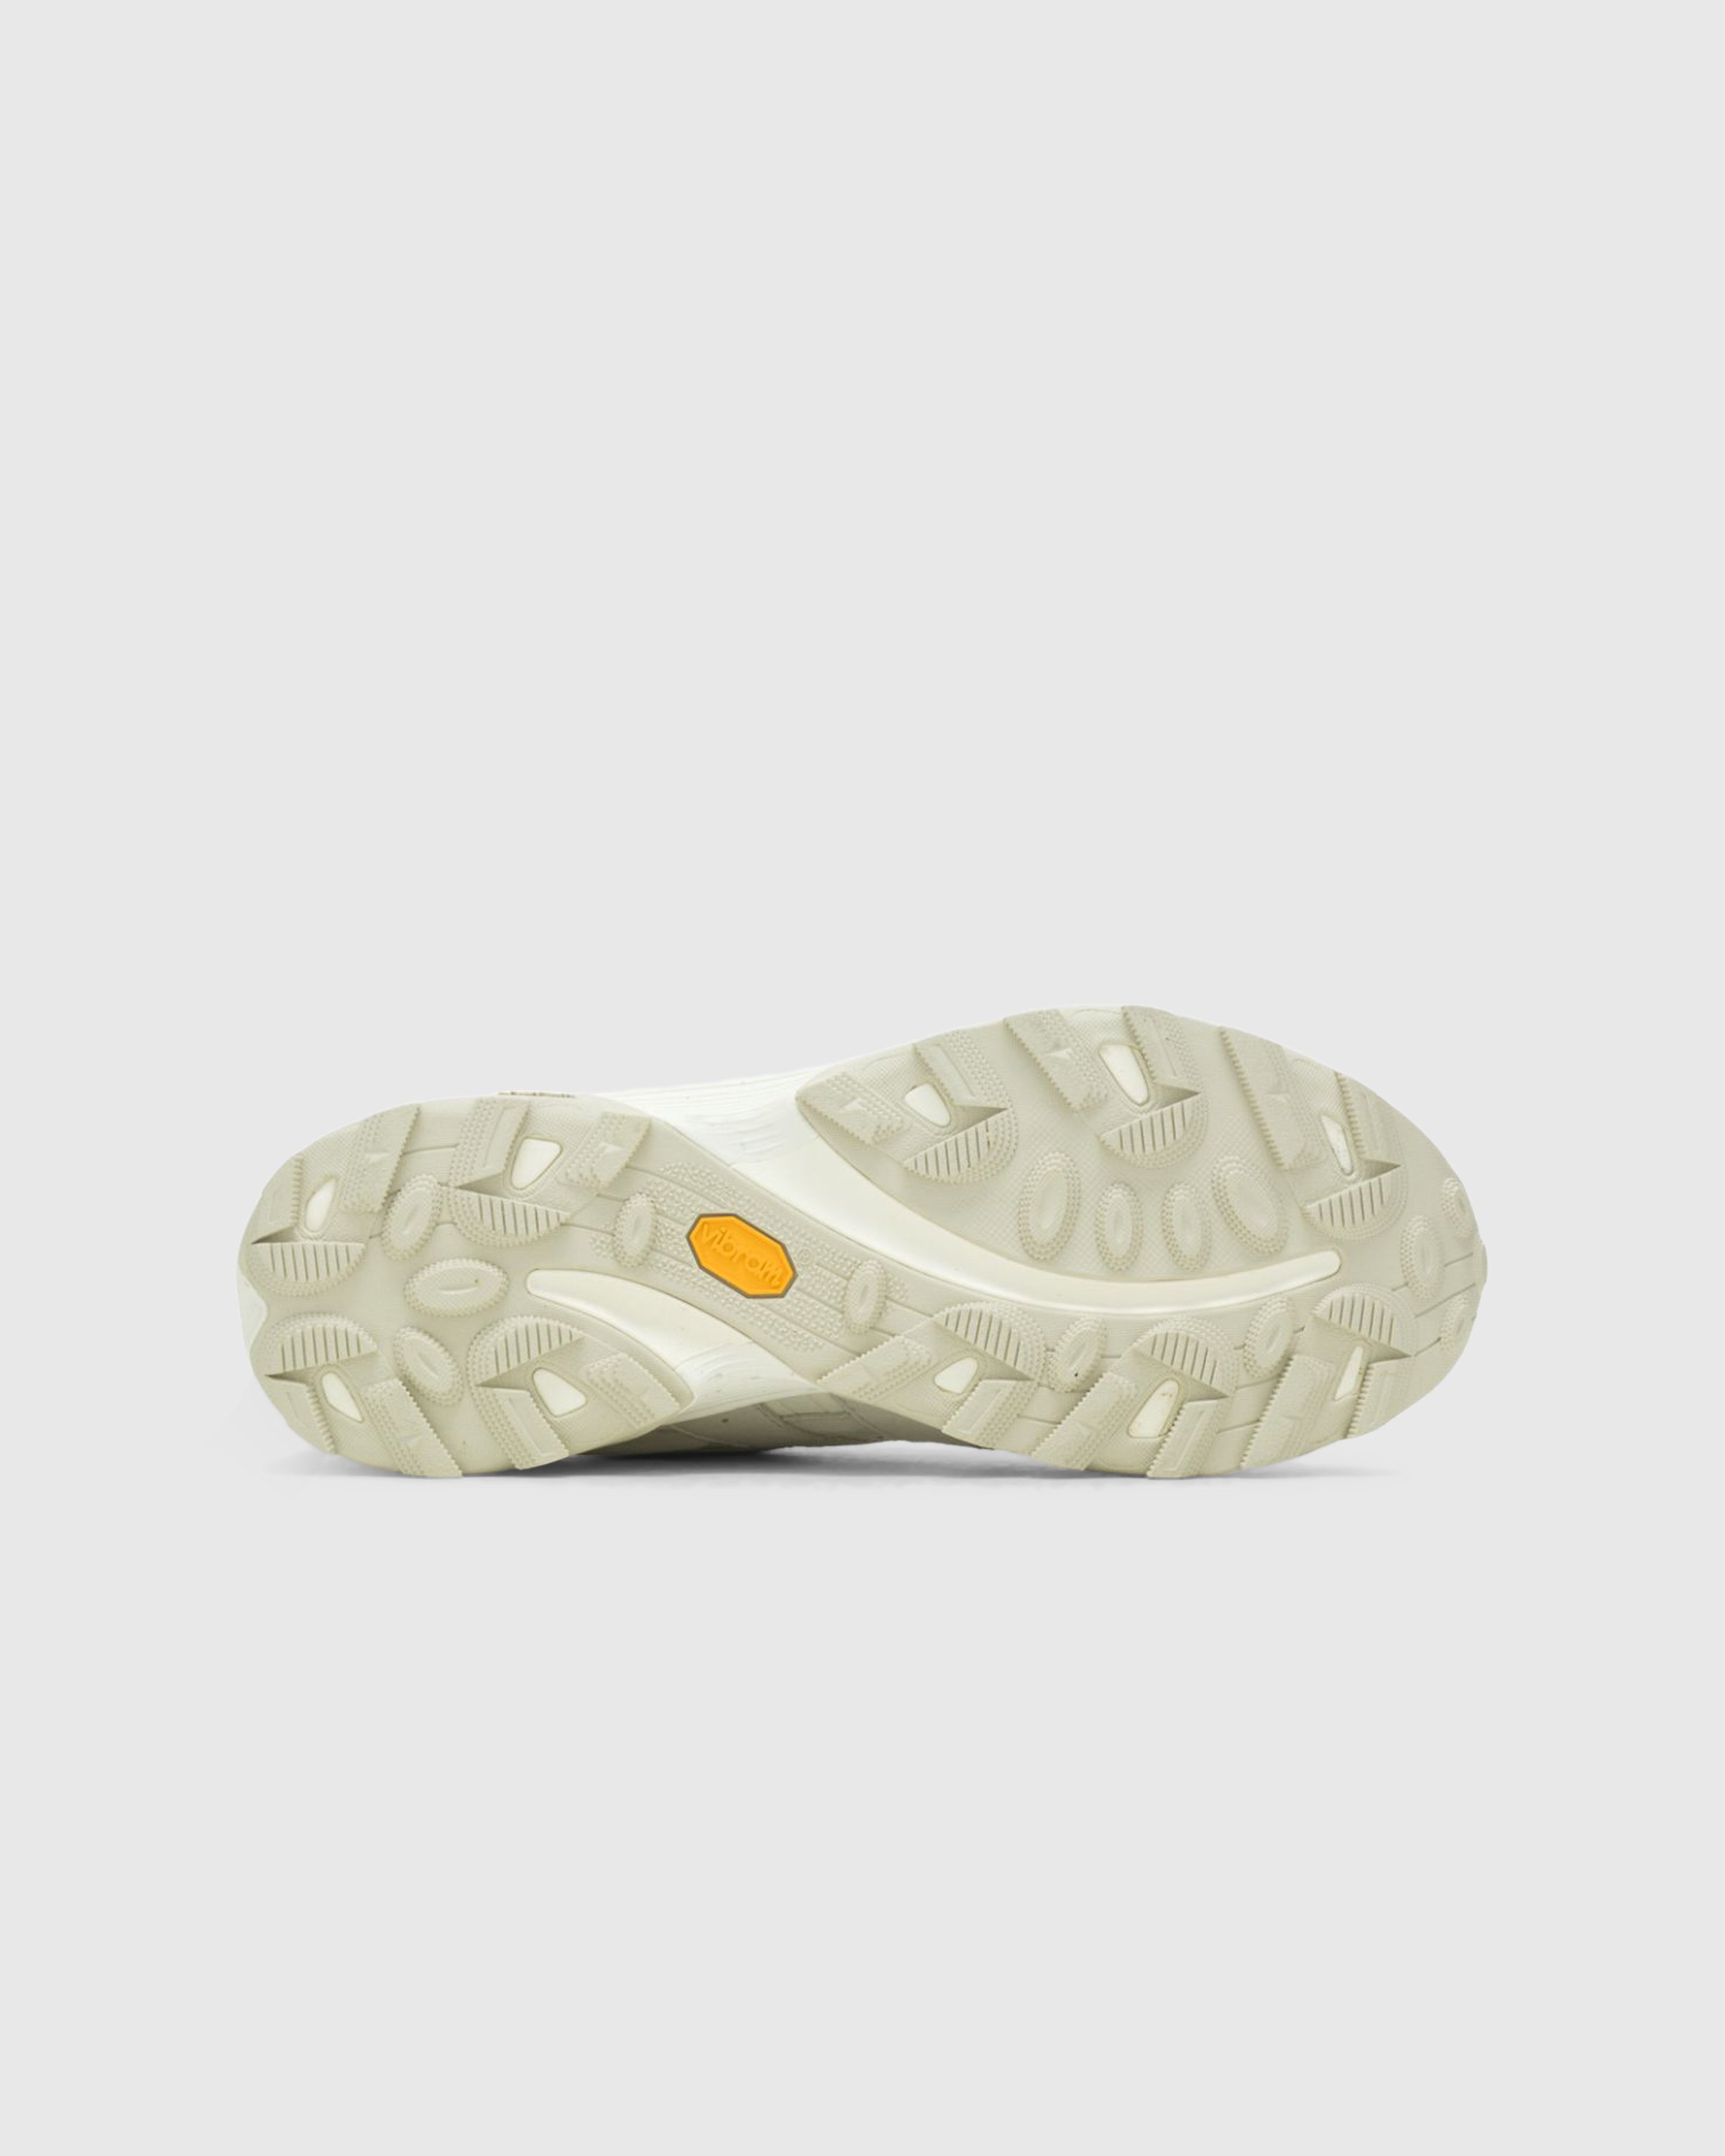 Merrell - Moab Hybrid Zip GORE-TEX 1TRL White - Footwear - White - Image 5